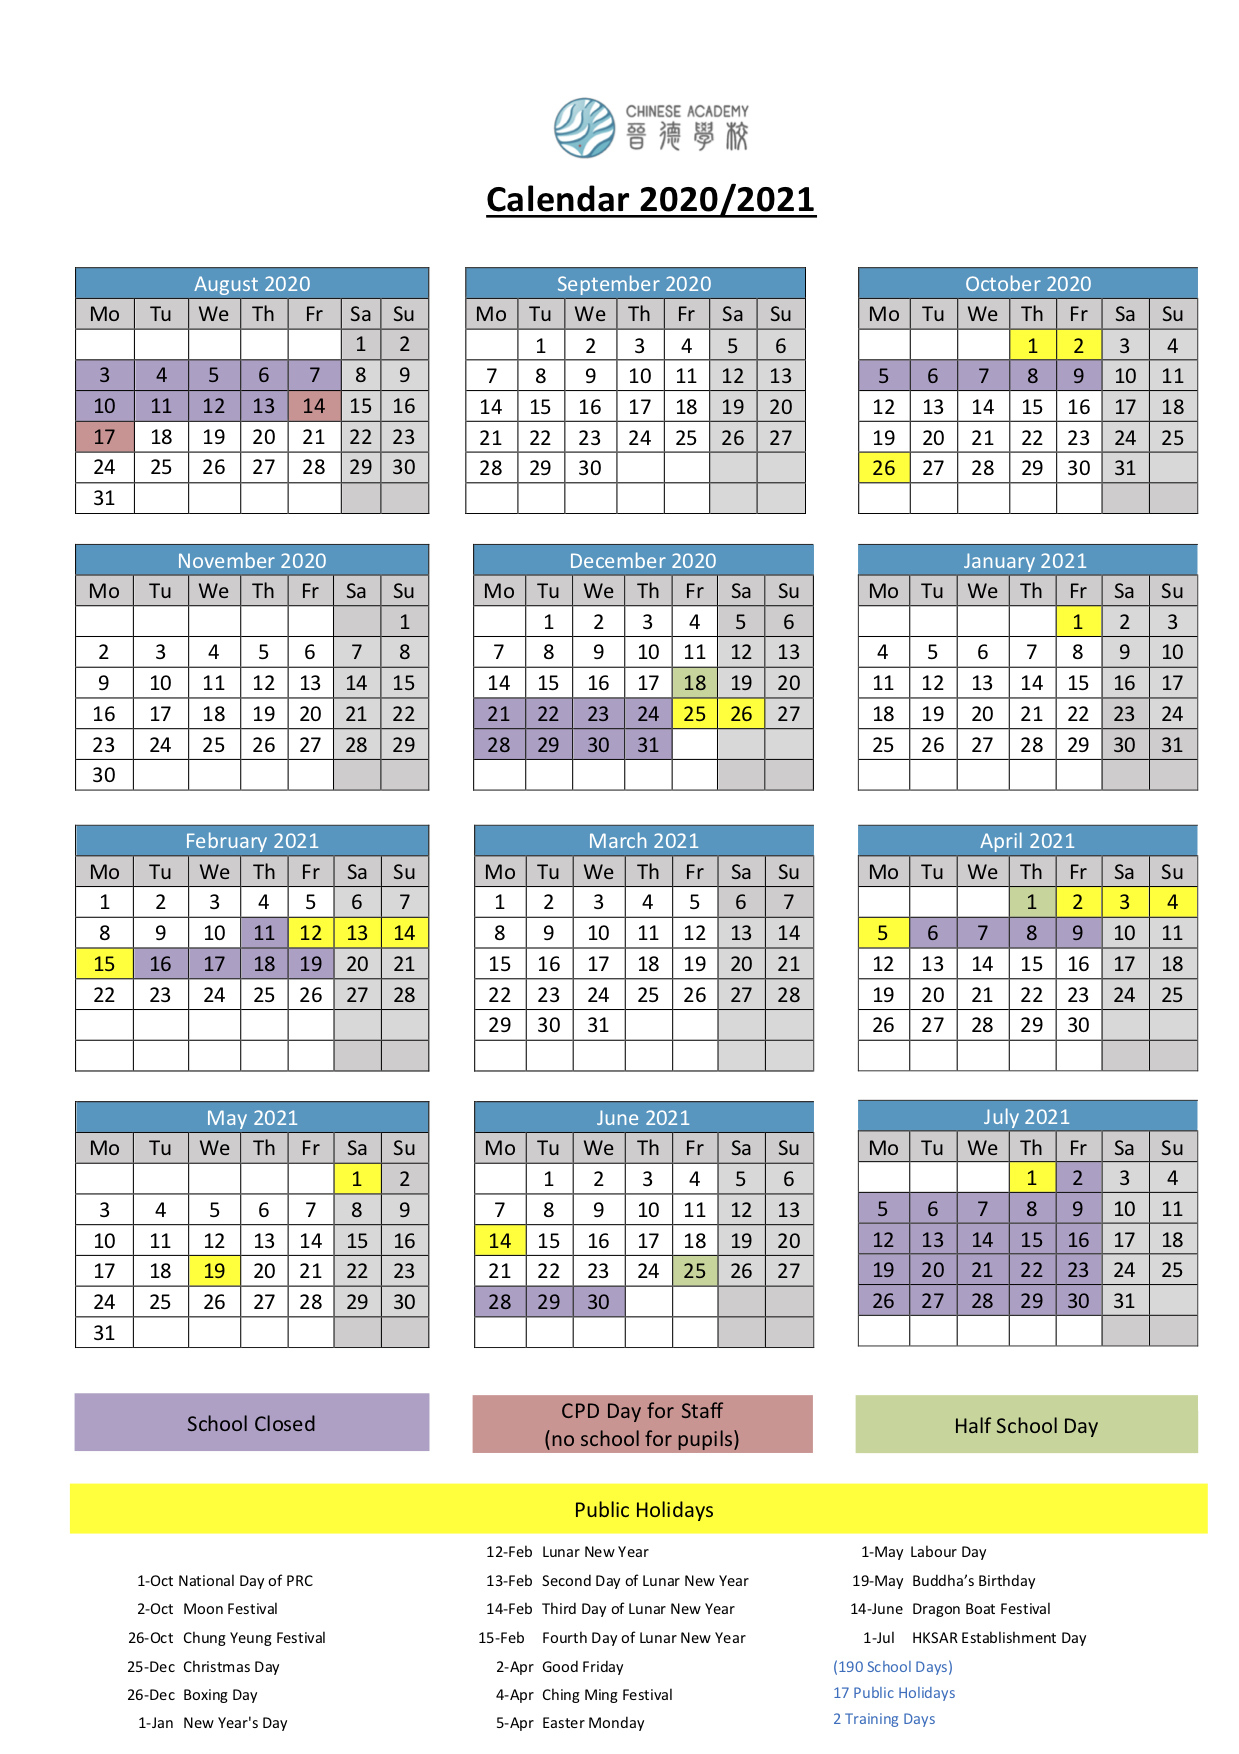 School Calendar 2020/2021 (Provisional) - International Chinese Calendar December 2021